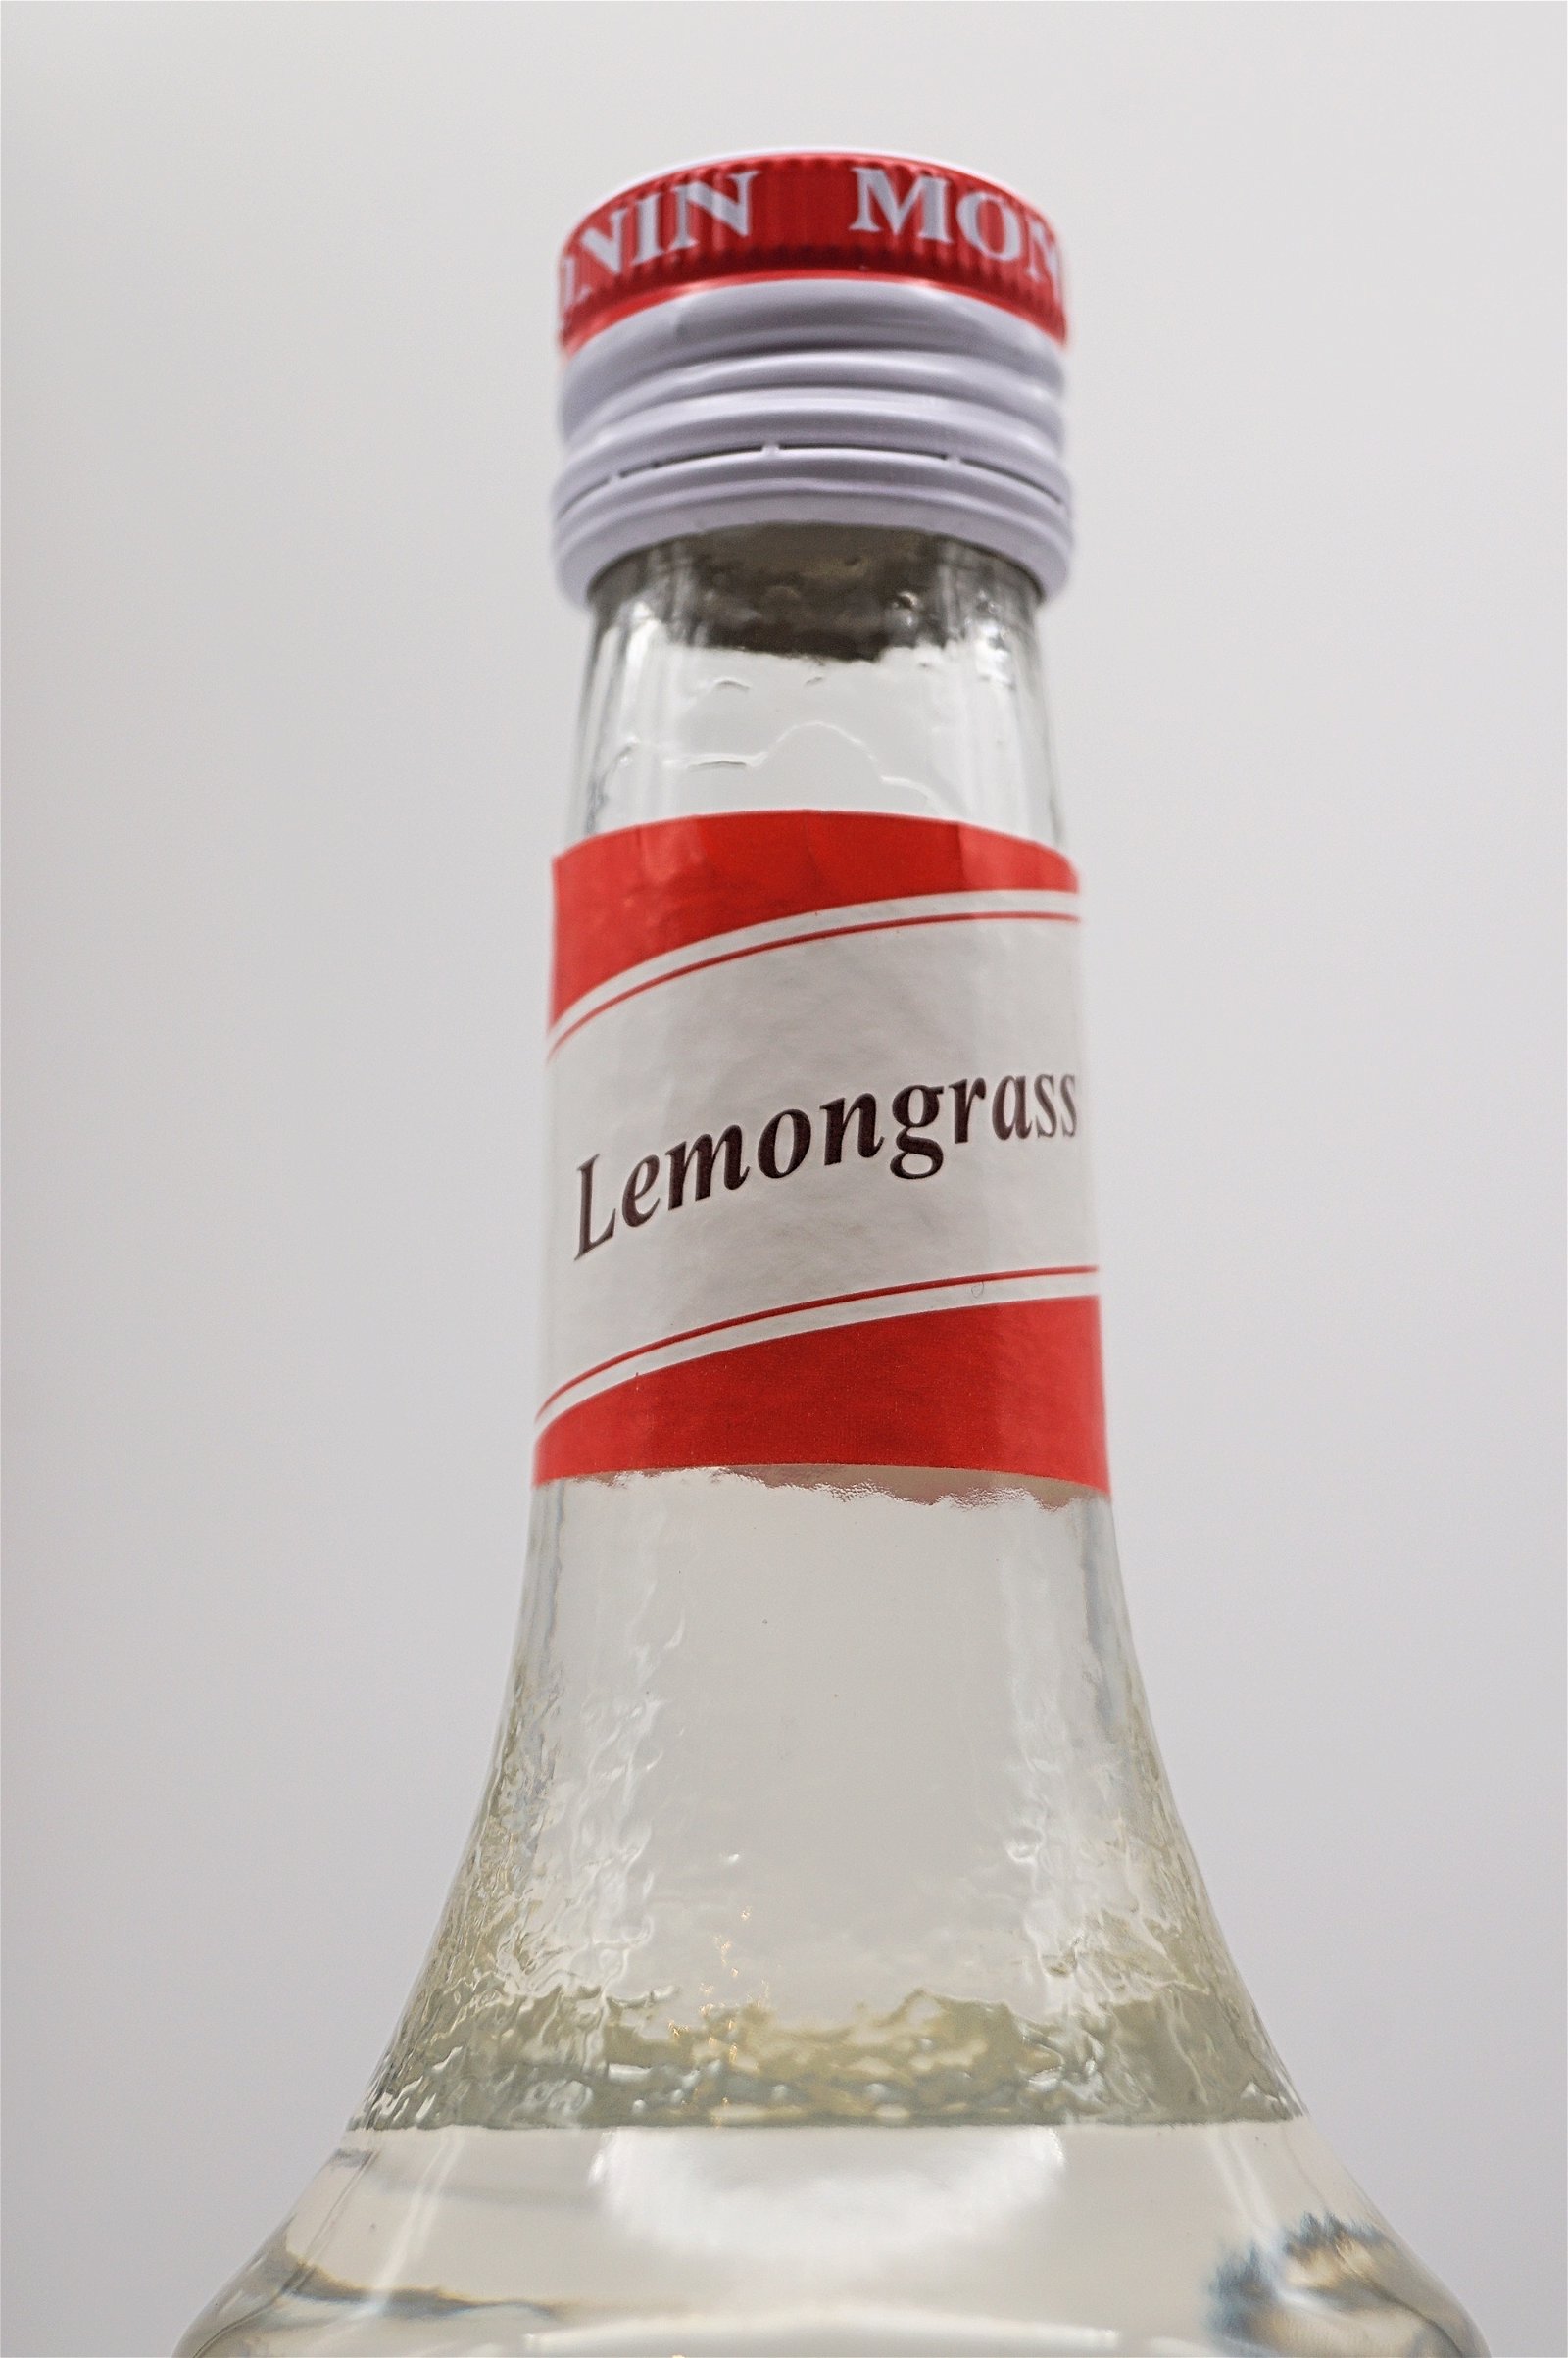 Monin Lemongrass Sirup